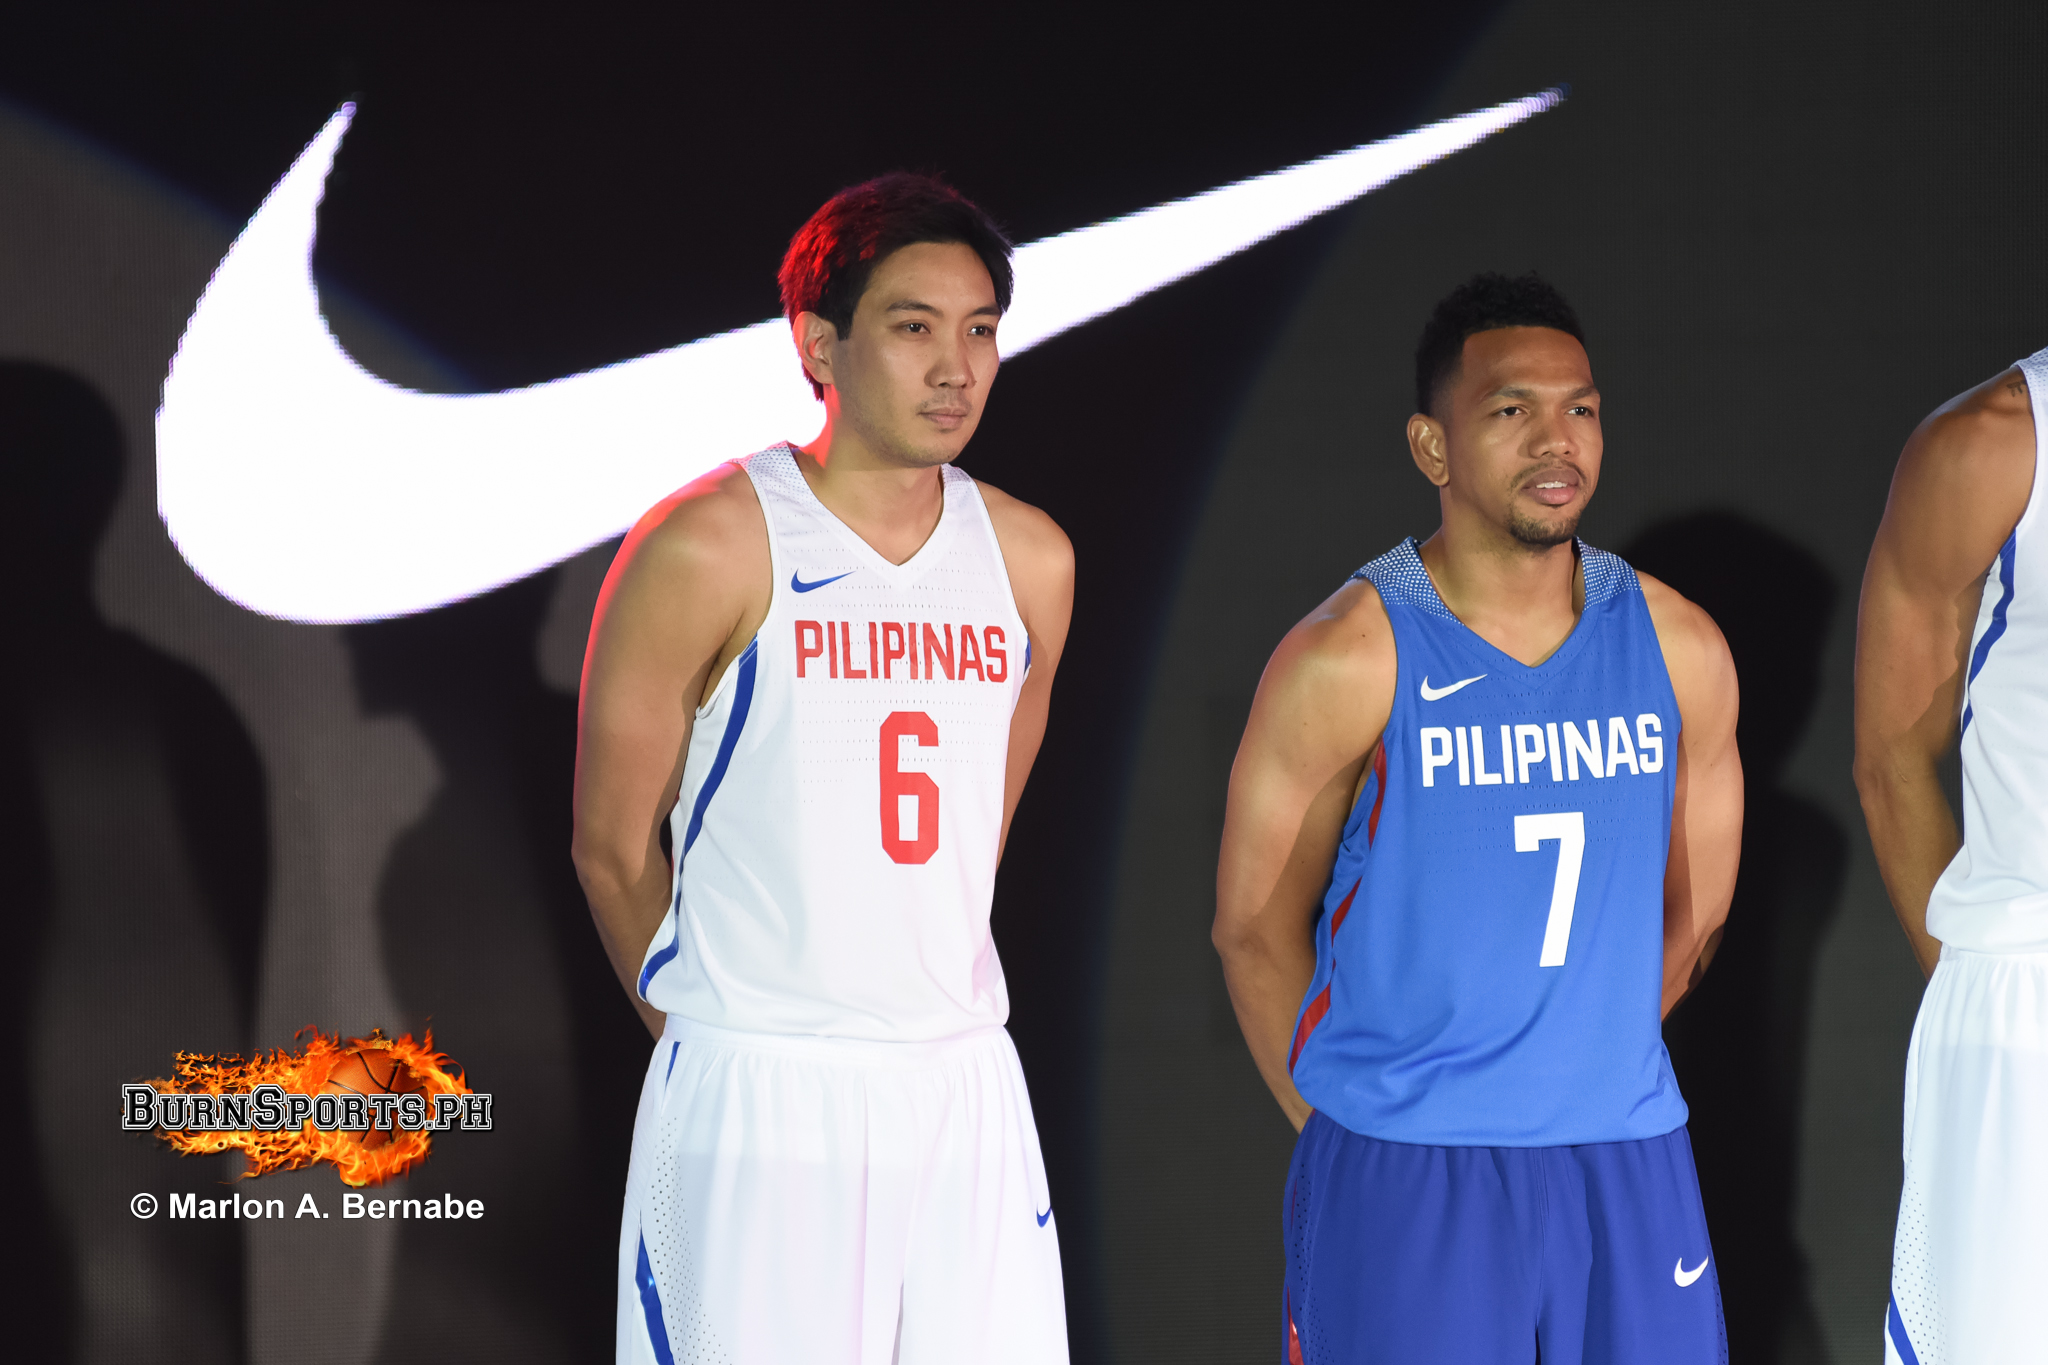 philippines basketball jersey nike